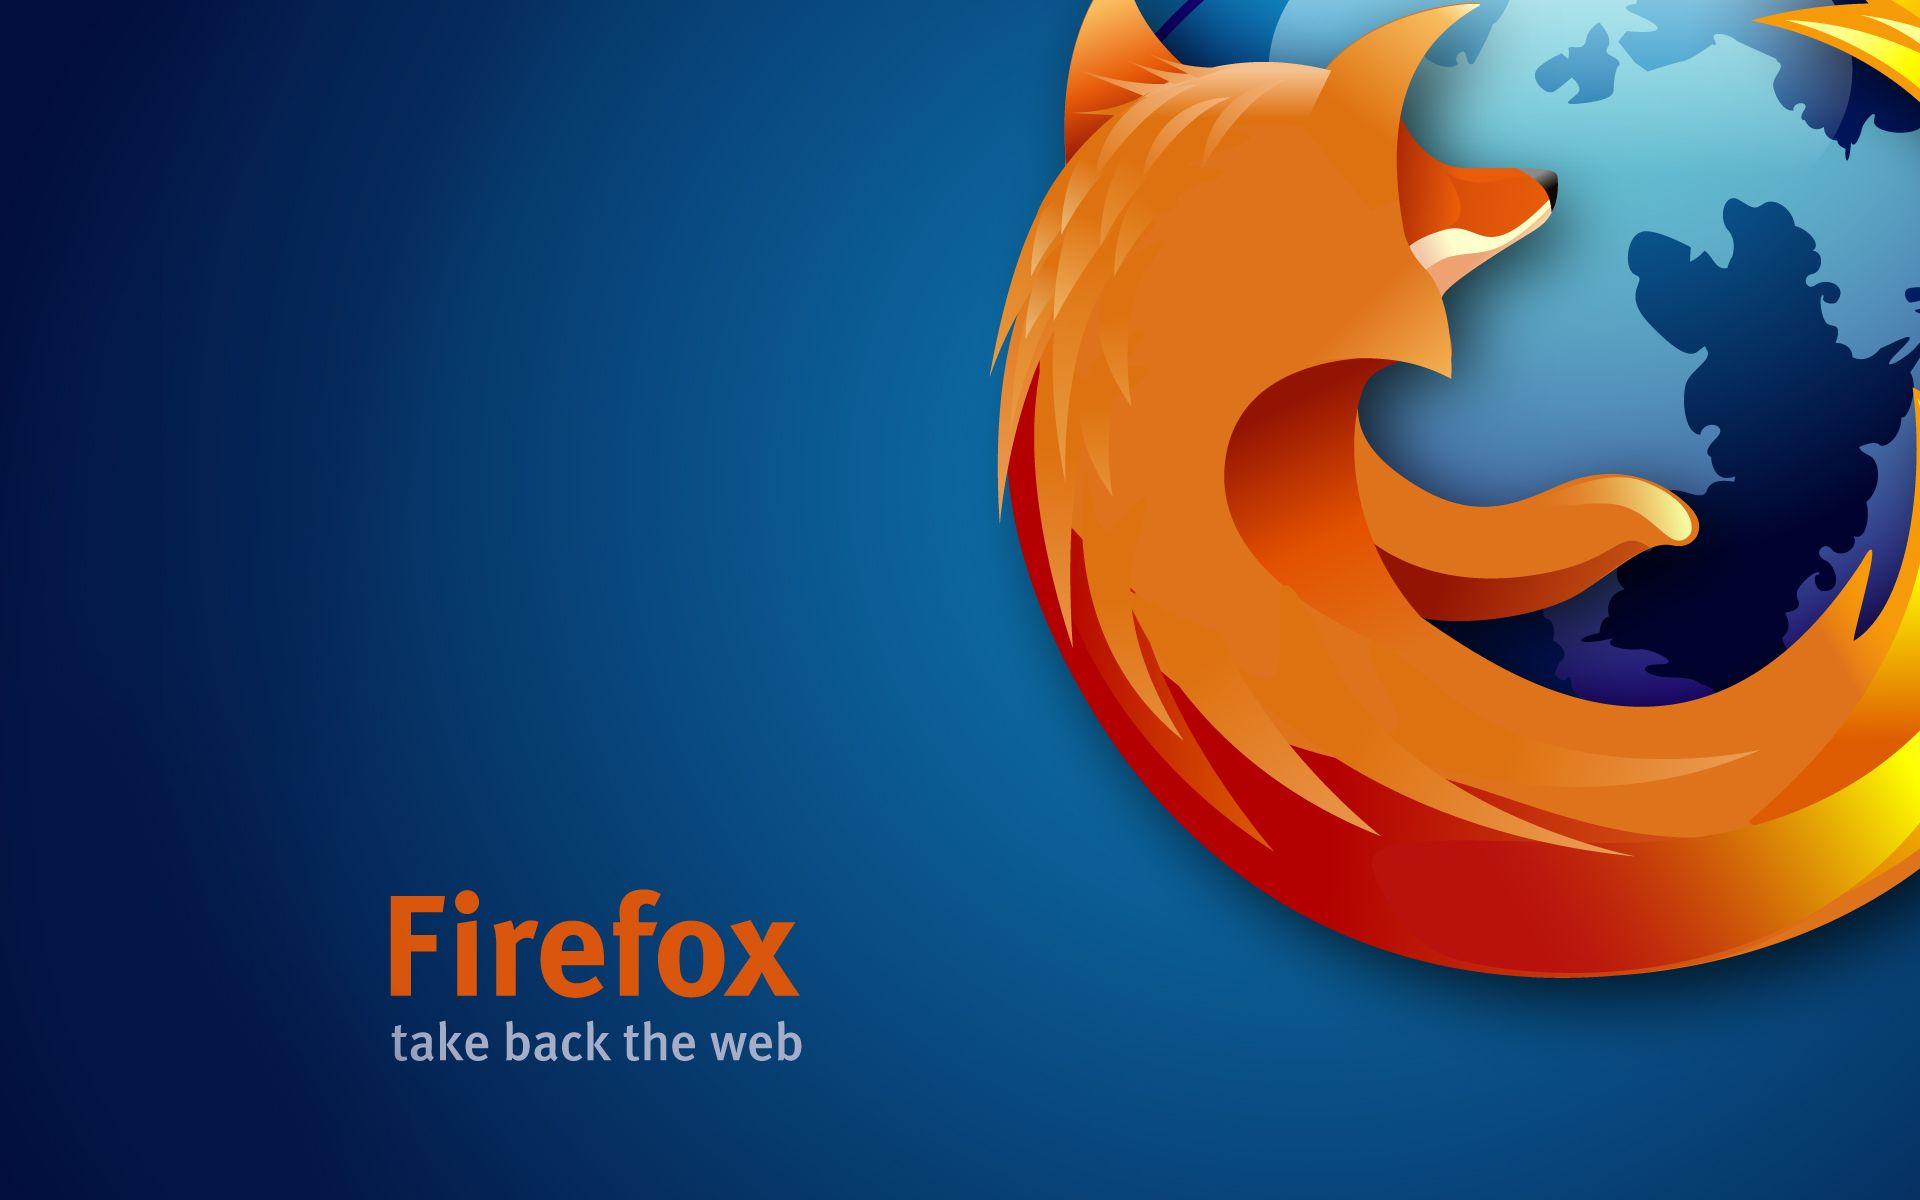 Firefox red fox software free desktop background wallpaper